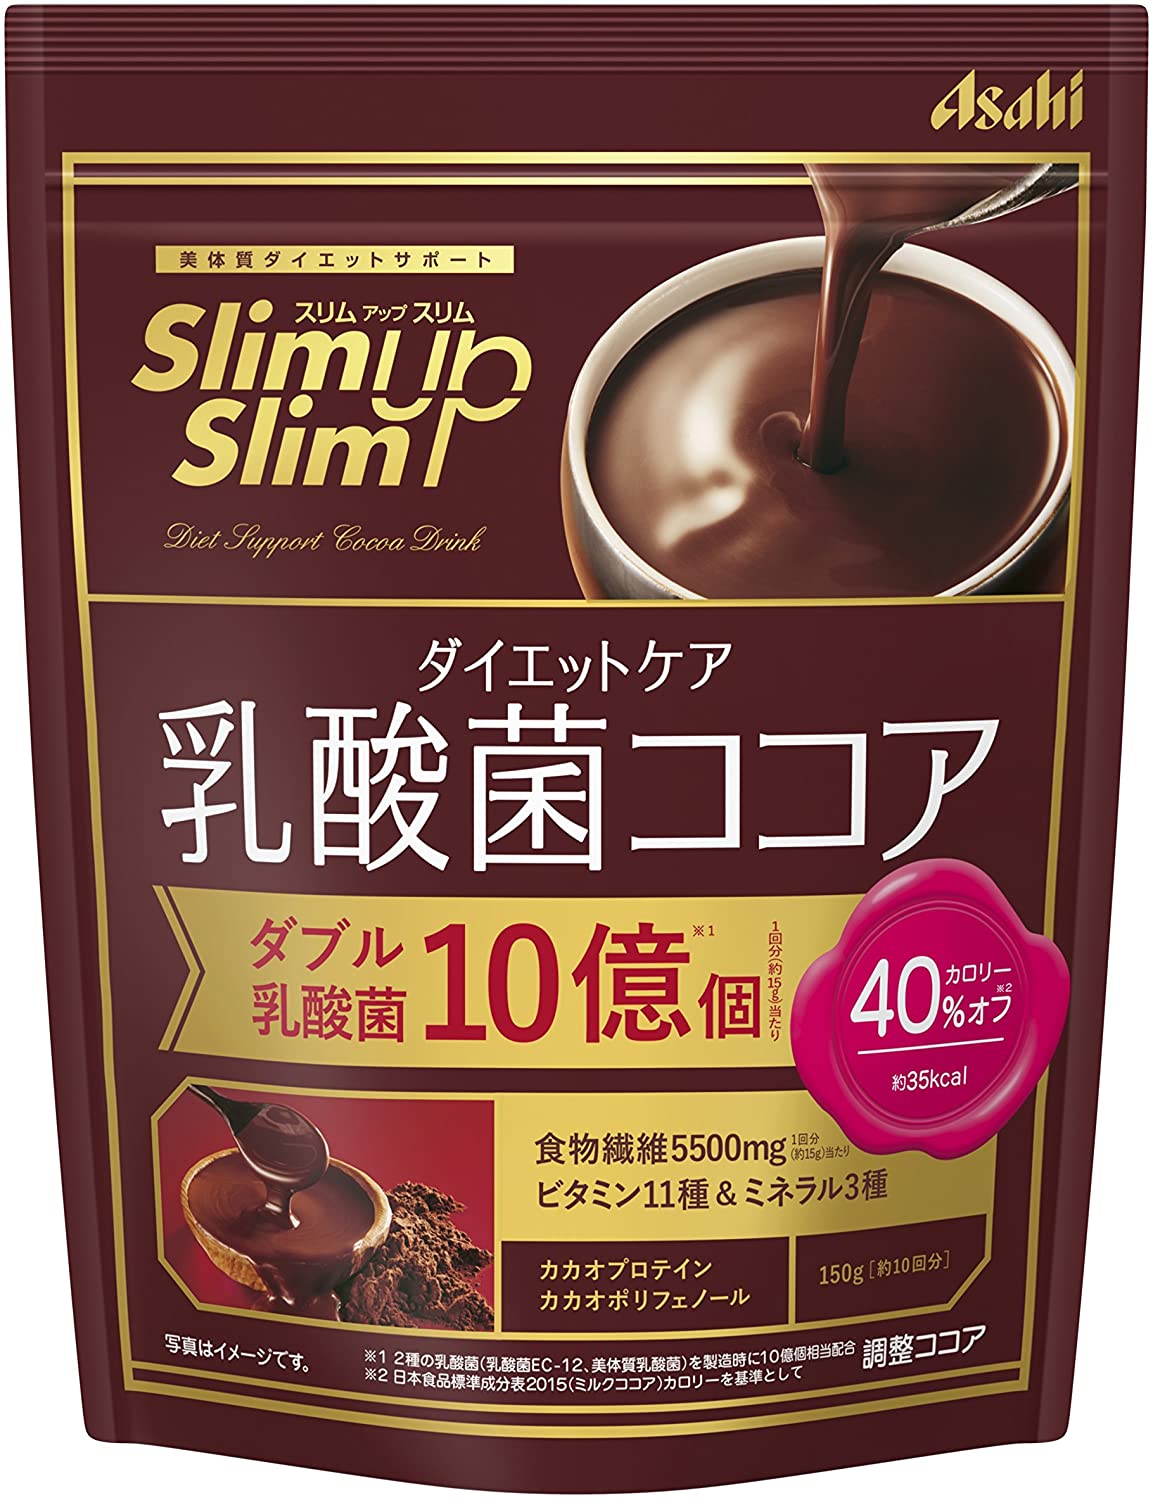 Протеиновый какао-напиток с молочнокислыми бактериями Protein Cocoa Drink SlimUpSlim Asahi, 150 гр